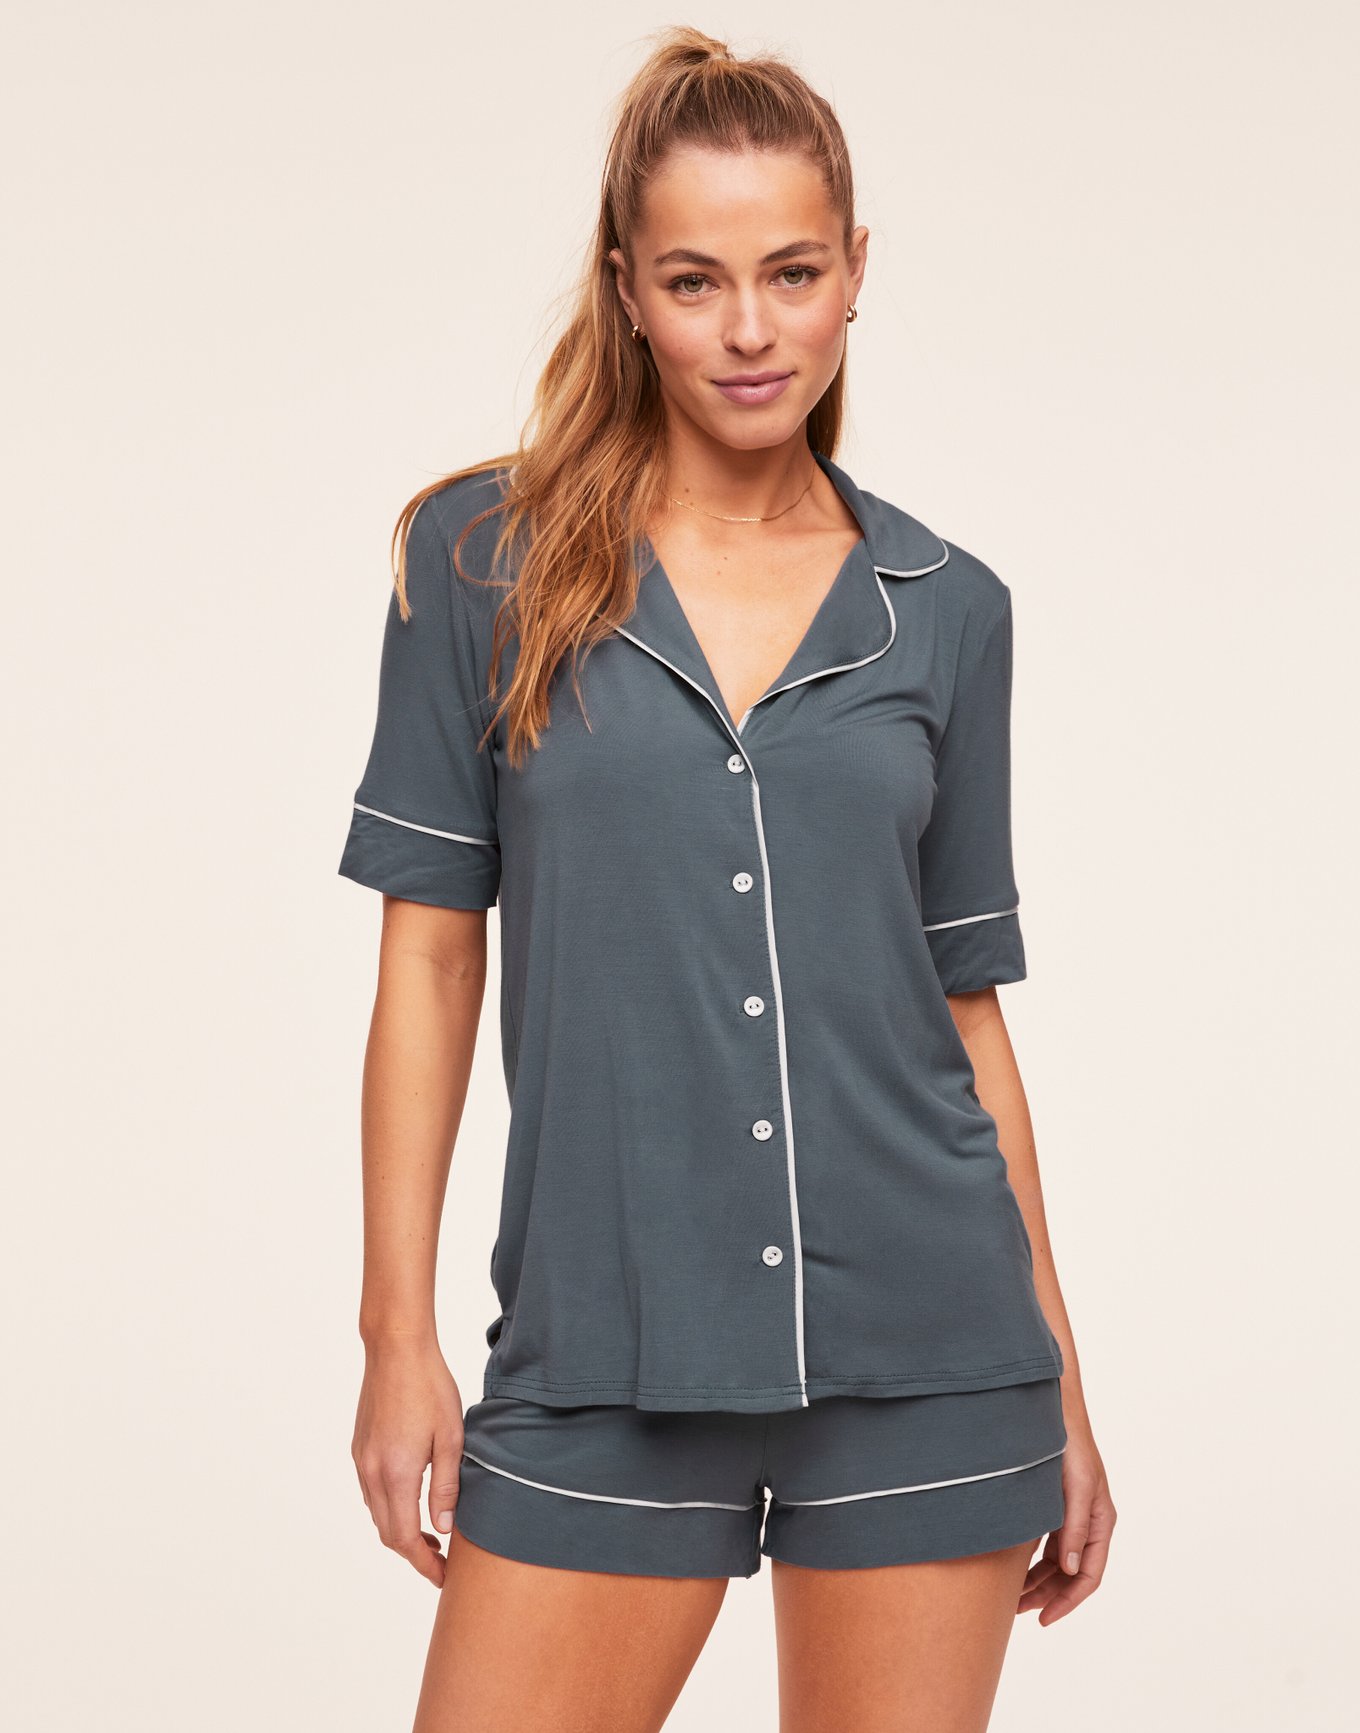  Lucky Brand Womens Pajama Set - 4 Piece Sleep Shirt, Tank  Top, Pajama Pants, Lounge Shorts